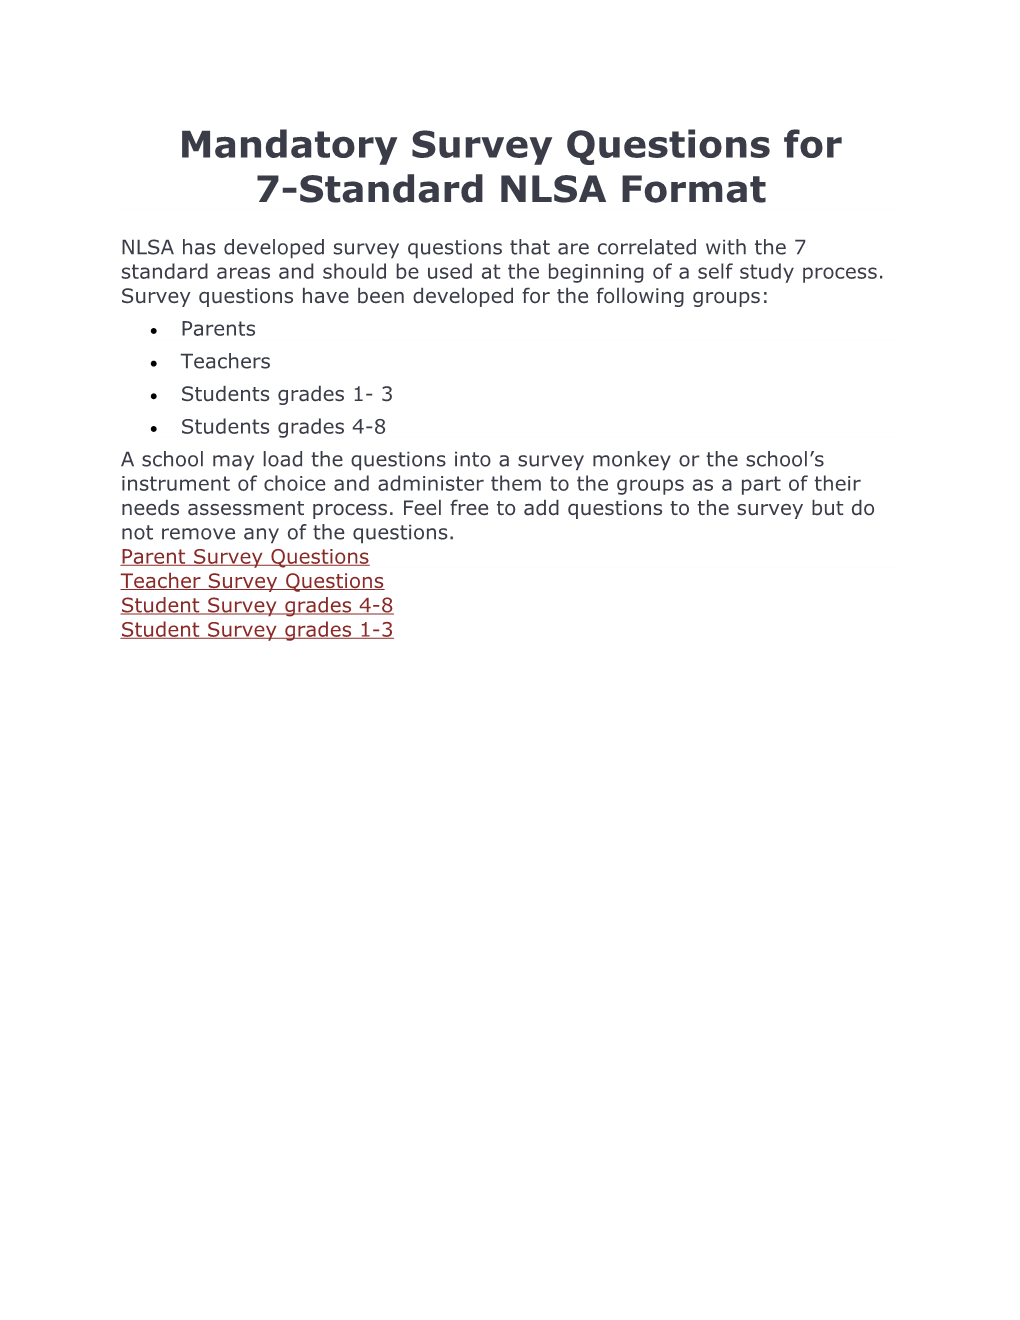 Mandatory Survey Questions for 7-Standard NLSA Format